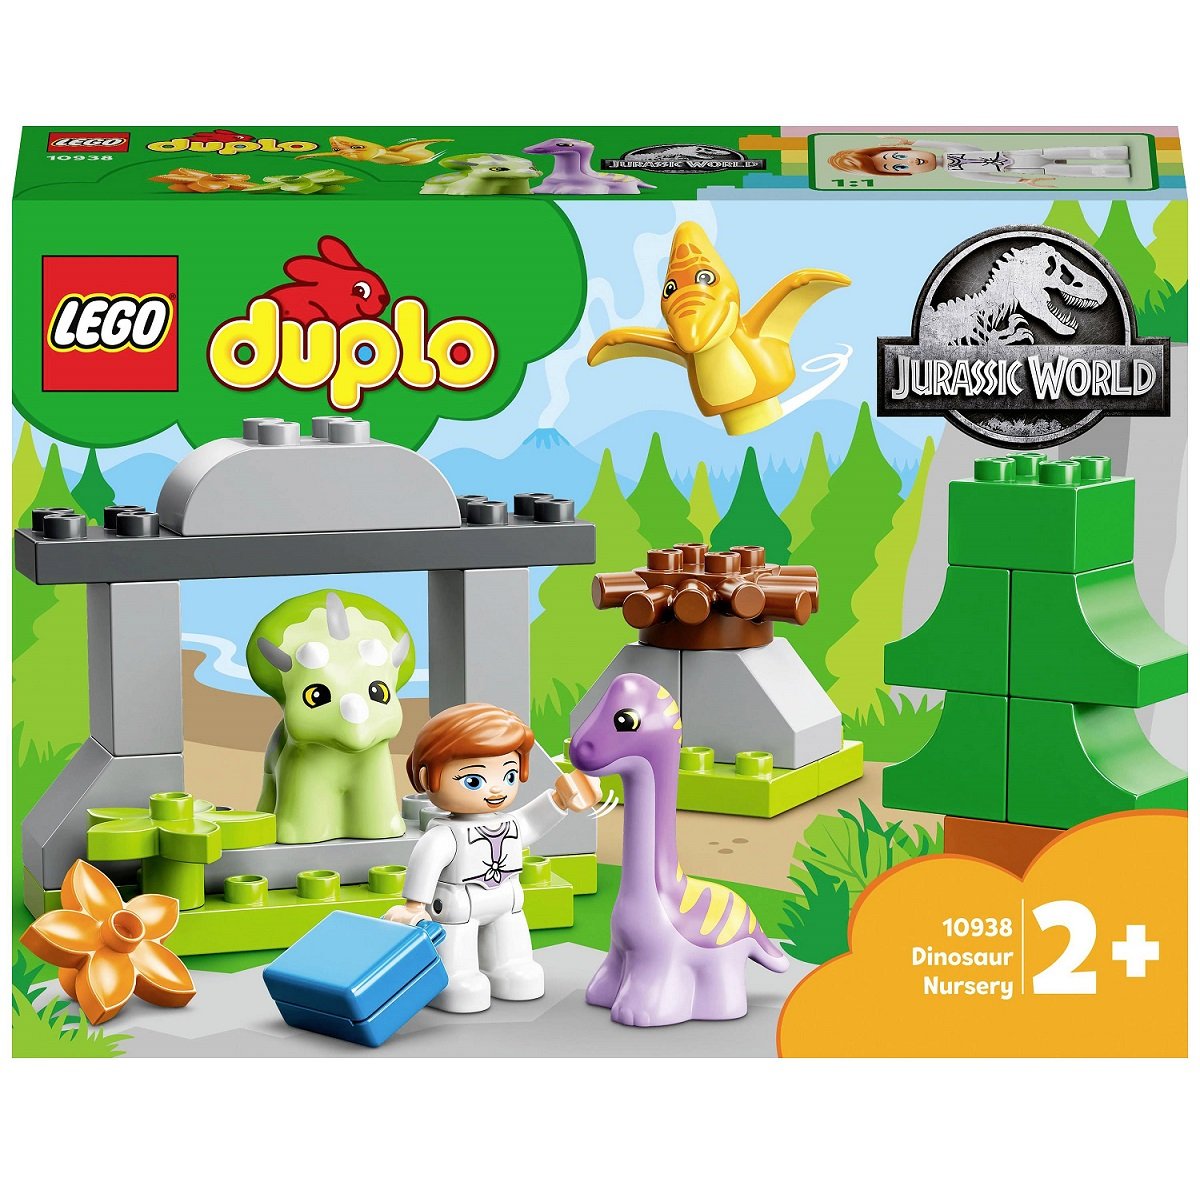 Конструктор LEGO DUPLO Jurassic World Дитячий садок для динозаврів, 27 деталей (10938) - фото 1